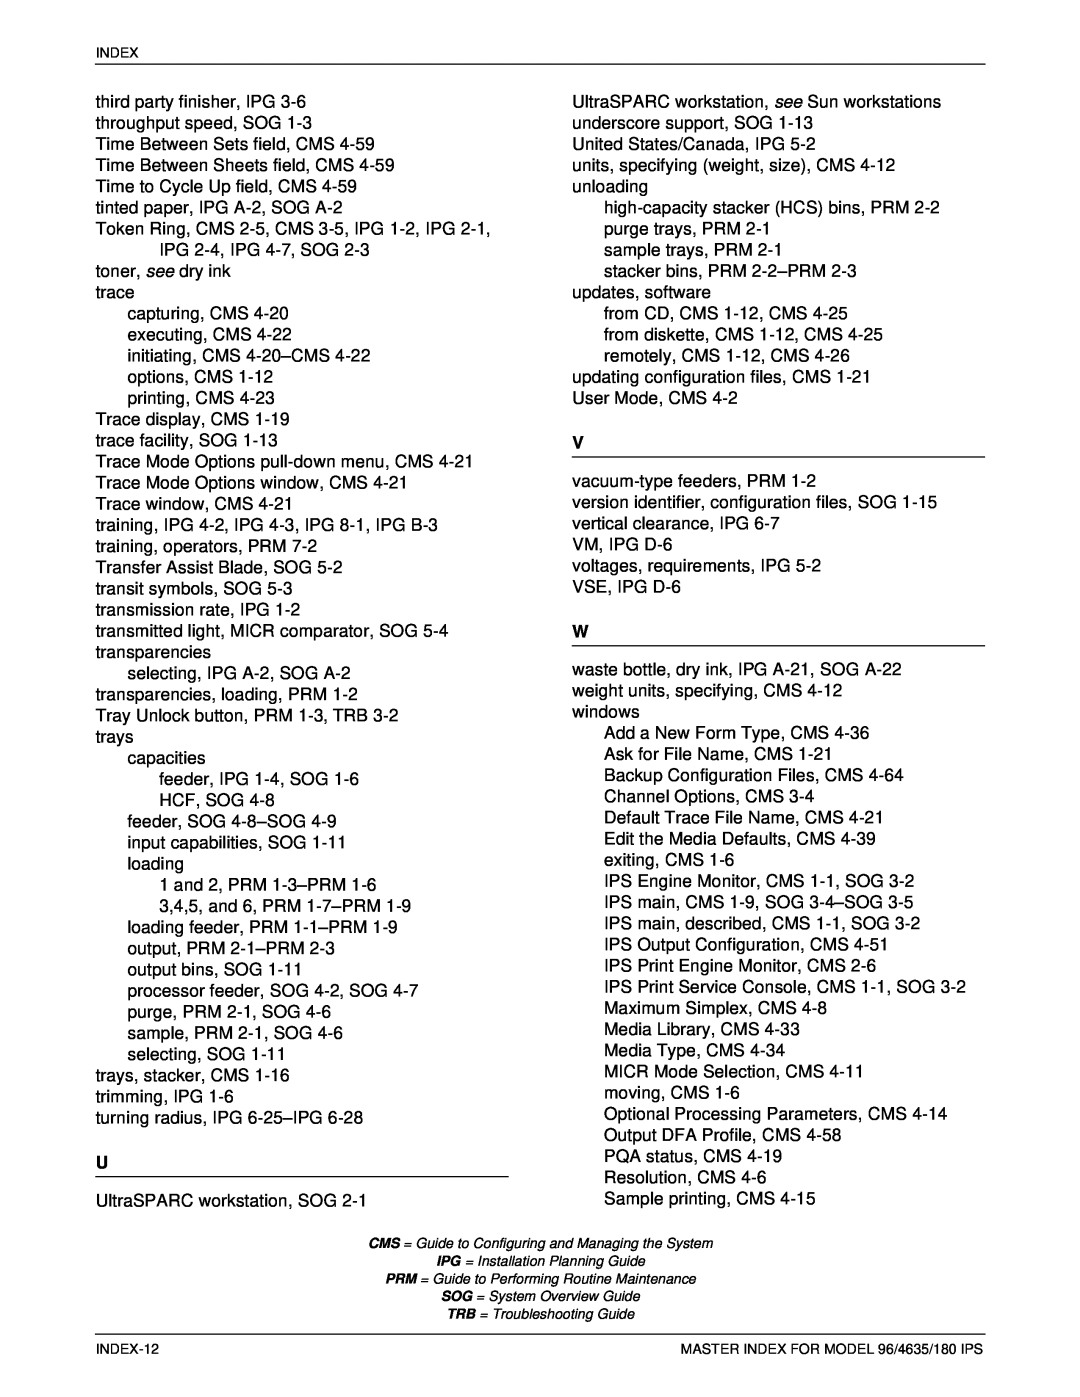 Xerox 4635 IPS, 96 IPS manual 